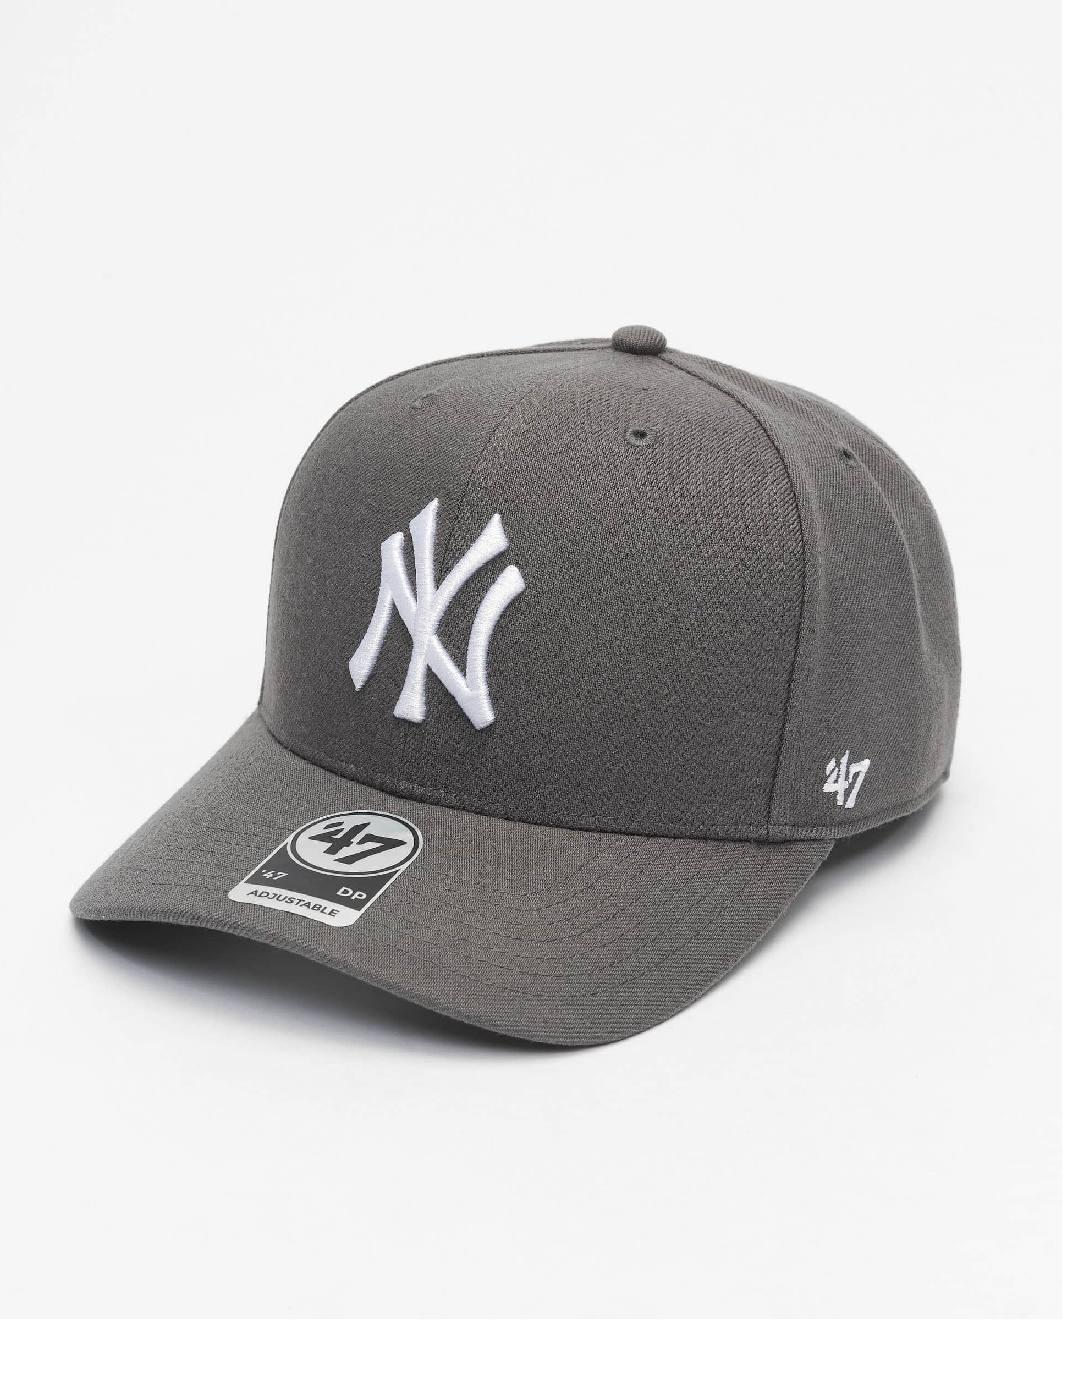 Gorra 47 Yankees de New York